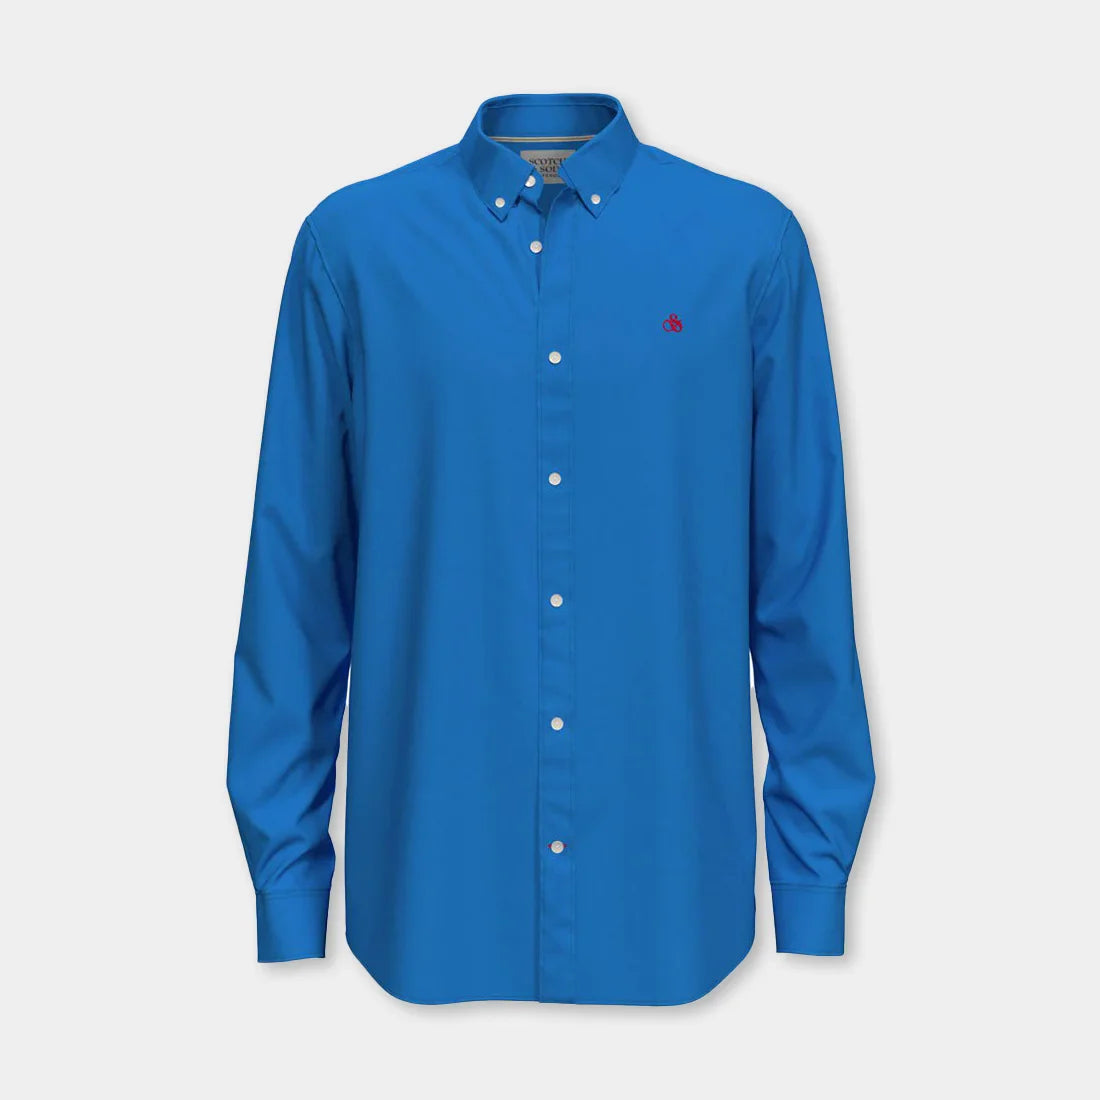 'Scotch & Soda Solid Oxford Button-Down Shirt' in 'Blue' colour